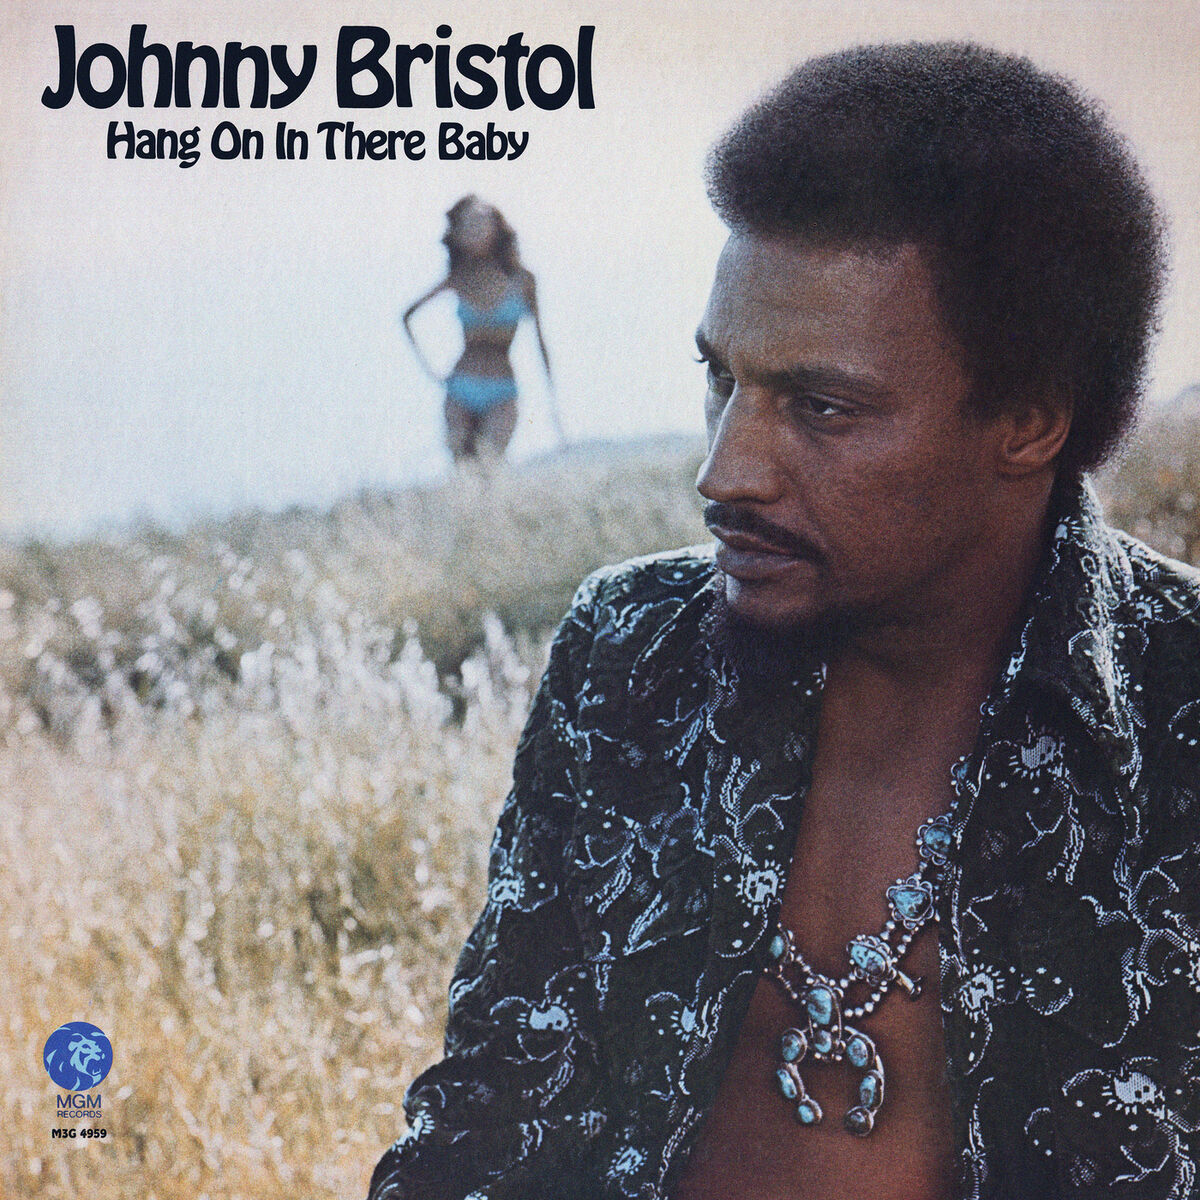 Johnny Bristol: albums, songs, playlists | Listen on Deezer